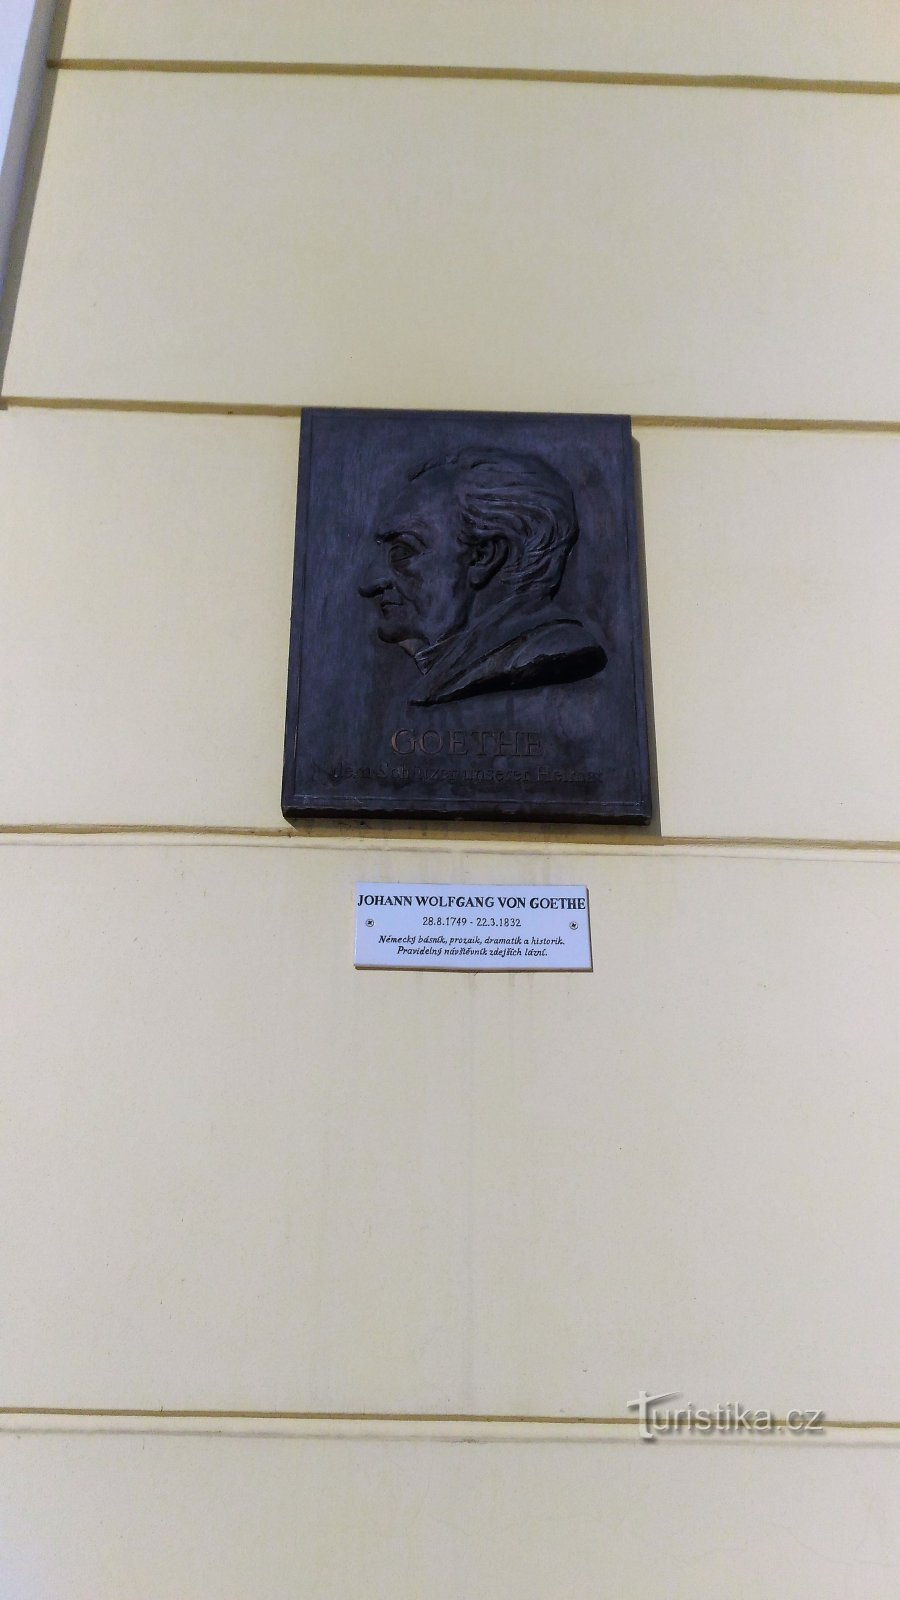 Commemorative plaque of Johann Wolfgang Goethe